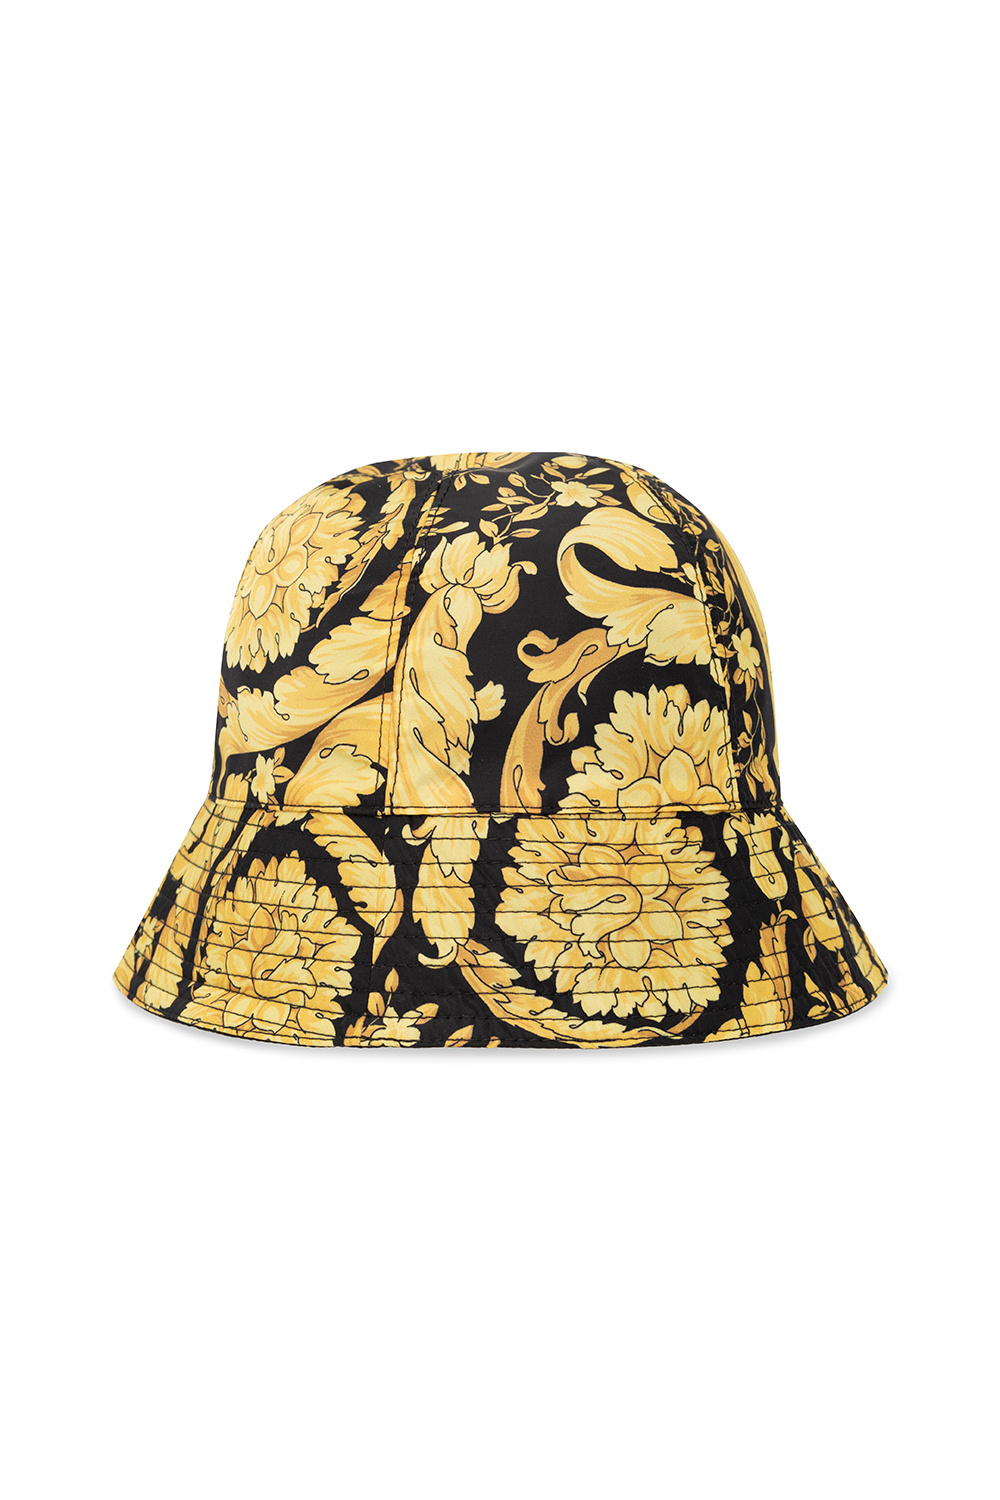 Versace Bucket Run hat with Barocco print